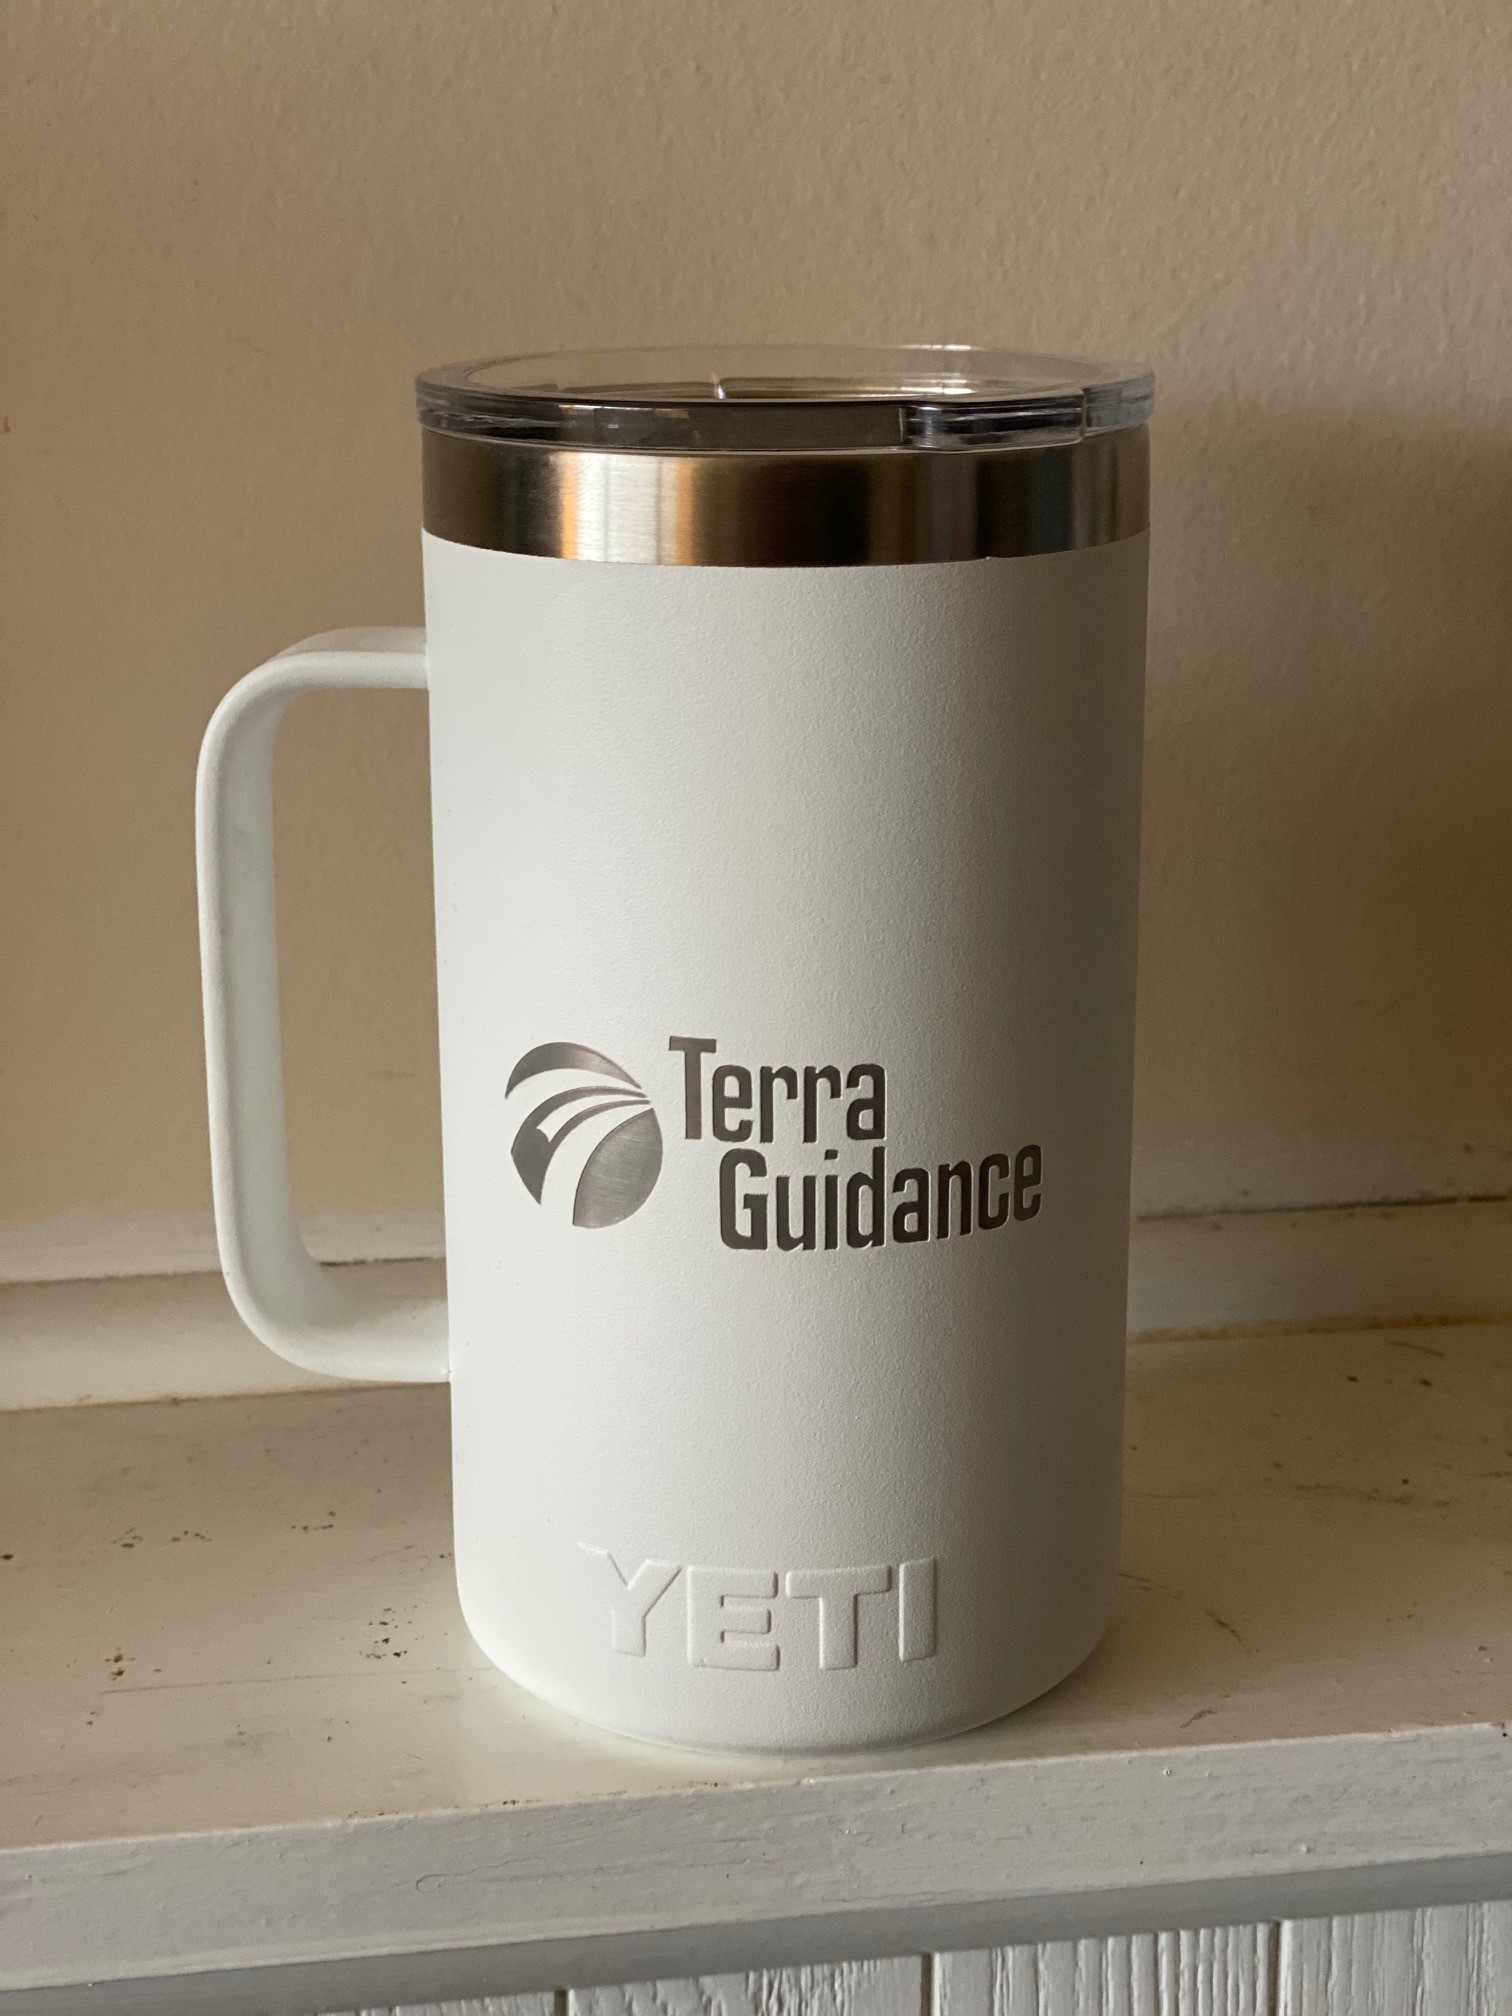 YETI - Terra Guidance